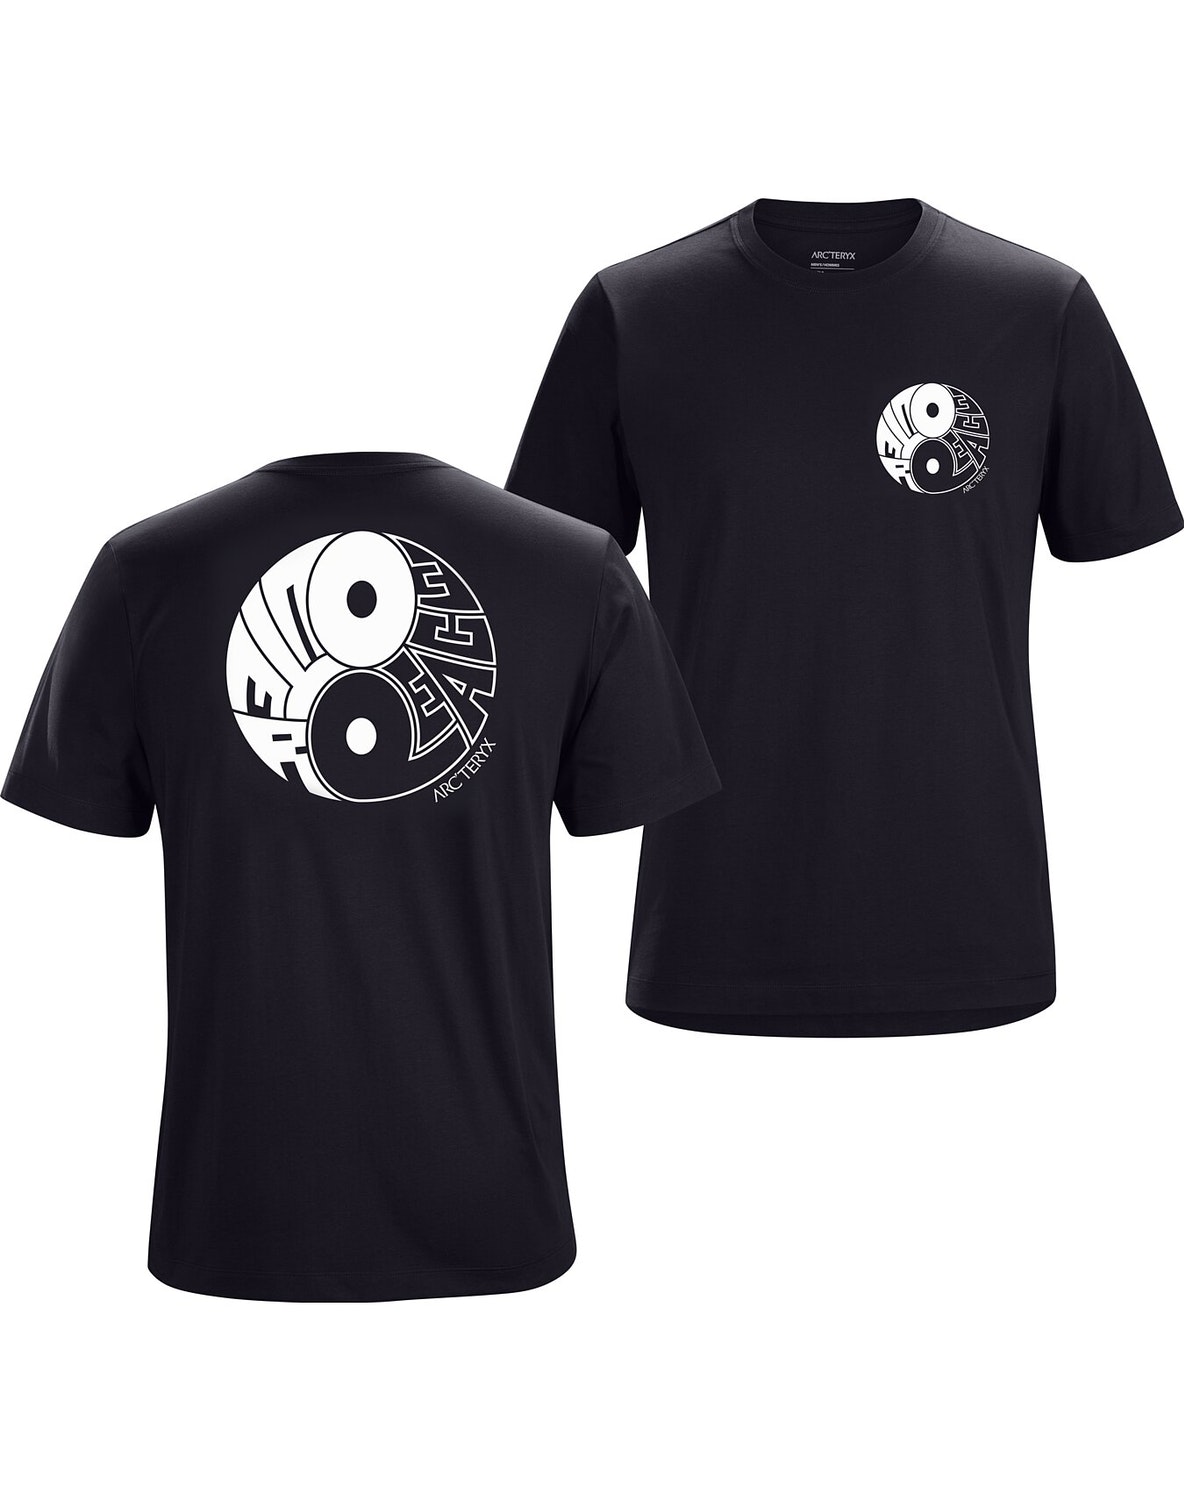 T-shirt Arc'teryx Balanced Uomo Nere - IT-751379